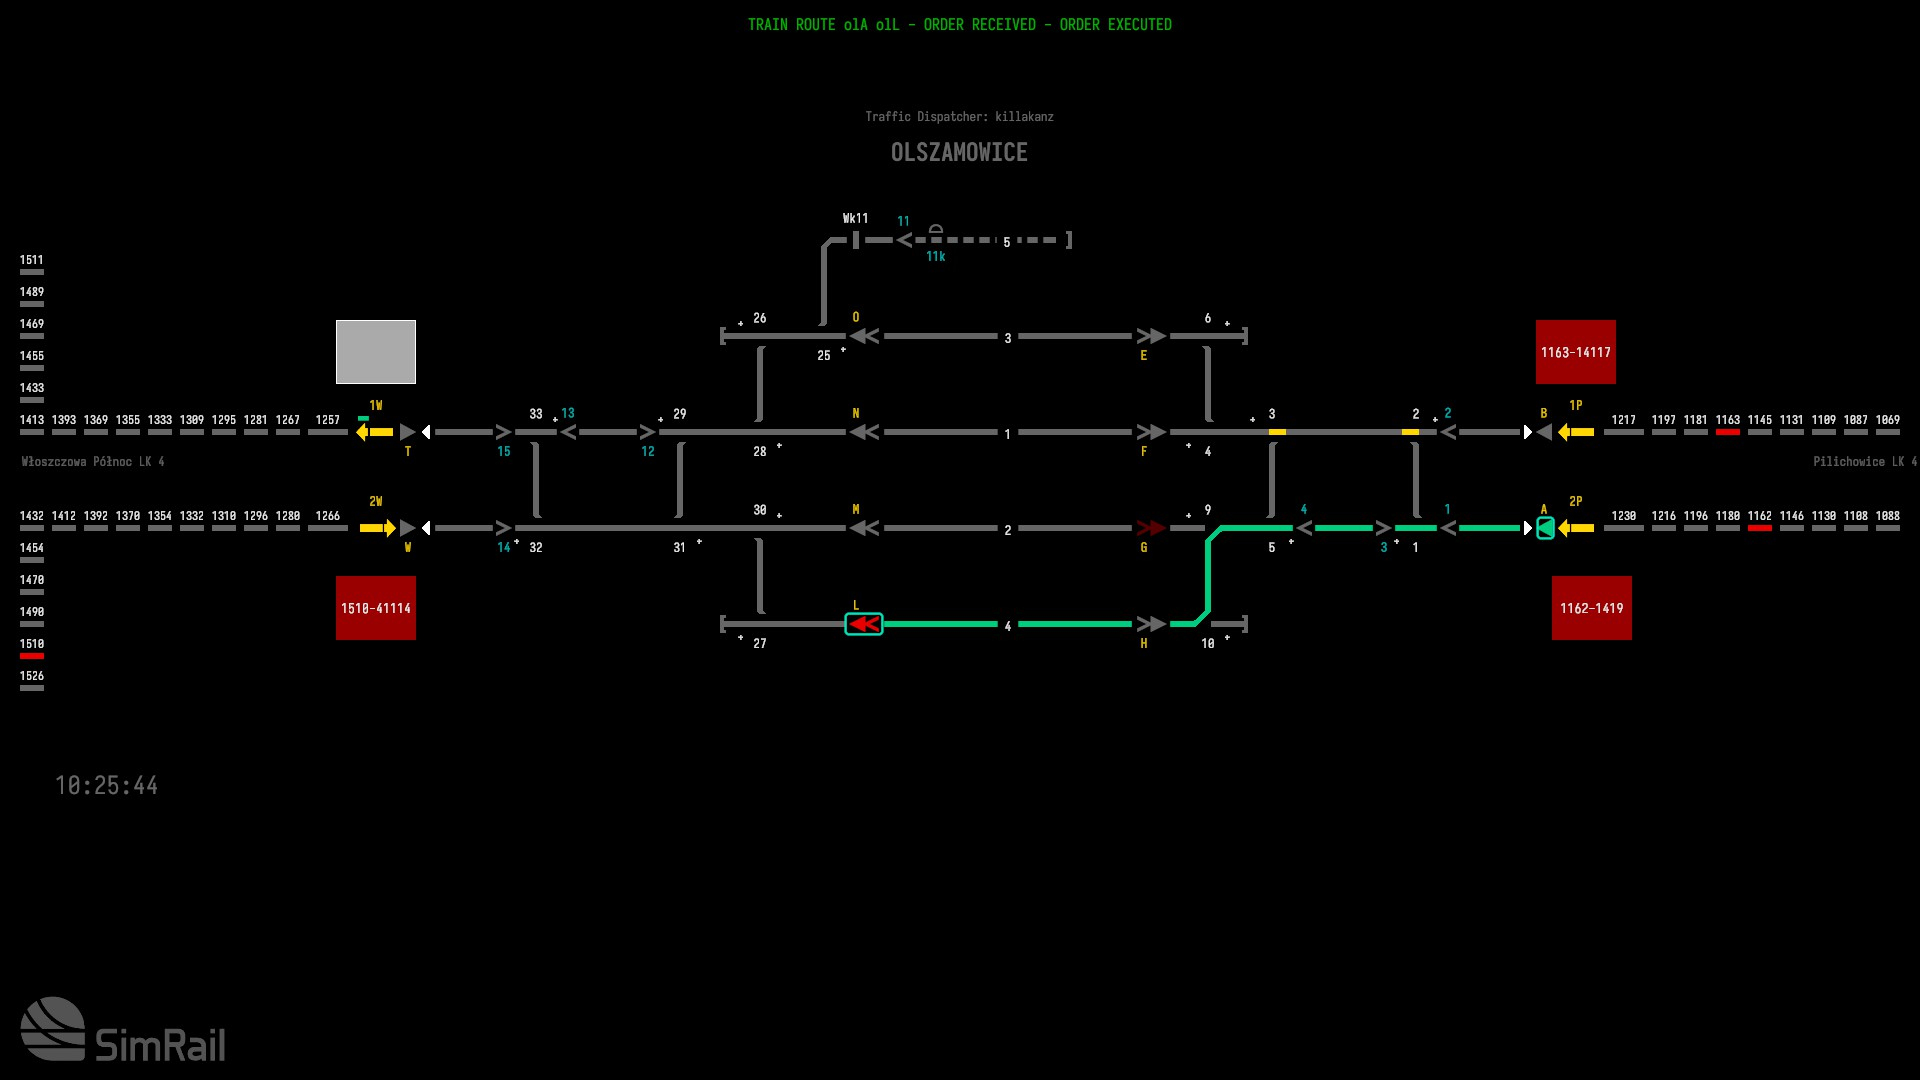 SimRail - The Railway Simulator - Basic Dispatching Full Guide - Computerised signalling - 54C4EEE